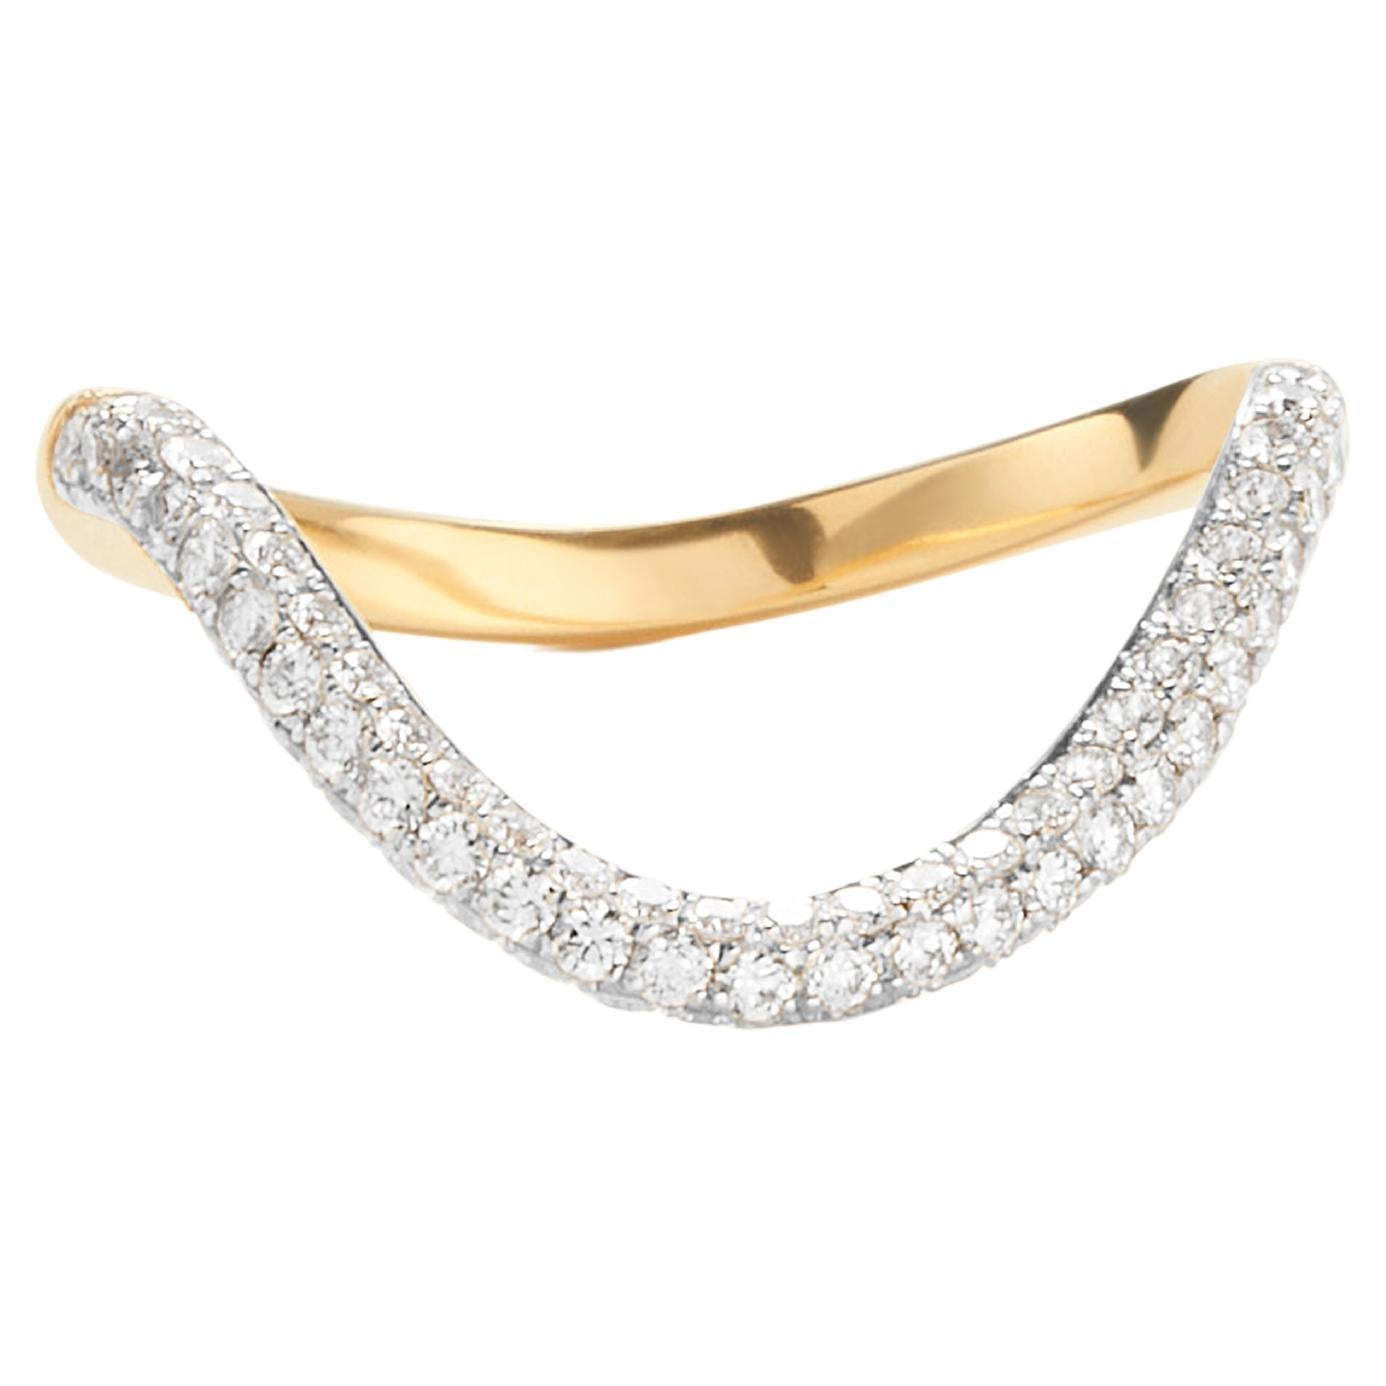 Rosario Navia Mara Medium Curved Ring II in 18K Gold and Diamonds